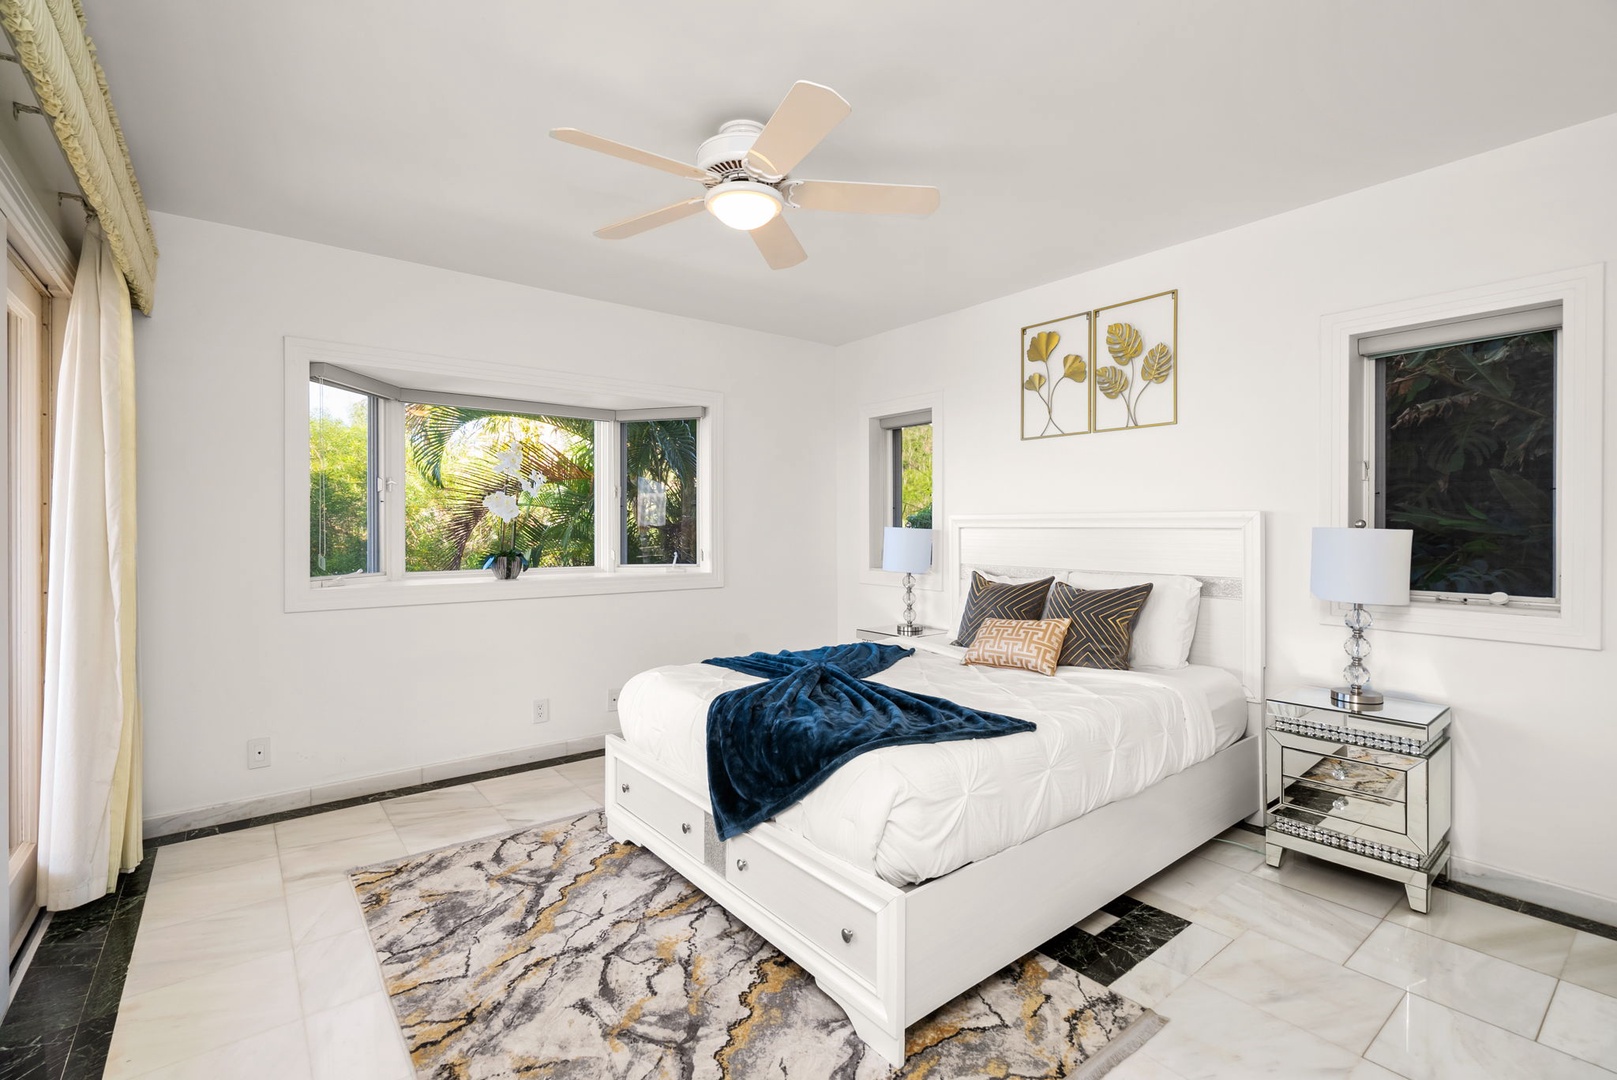 Honolulu Vacation Rentals, Hawaii Ridge Getaway - Guest bedroom with a plush bed.